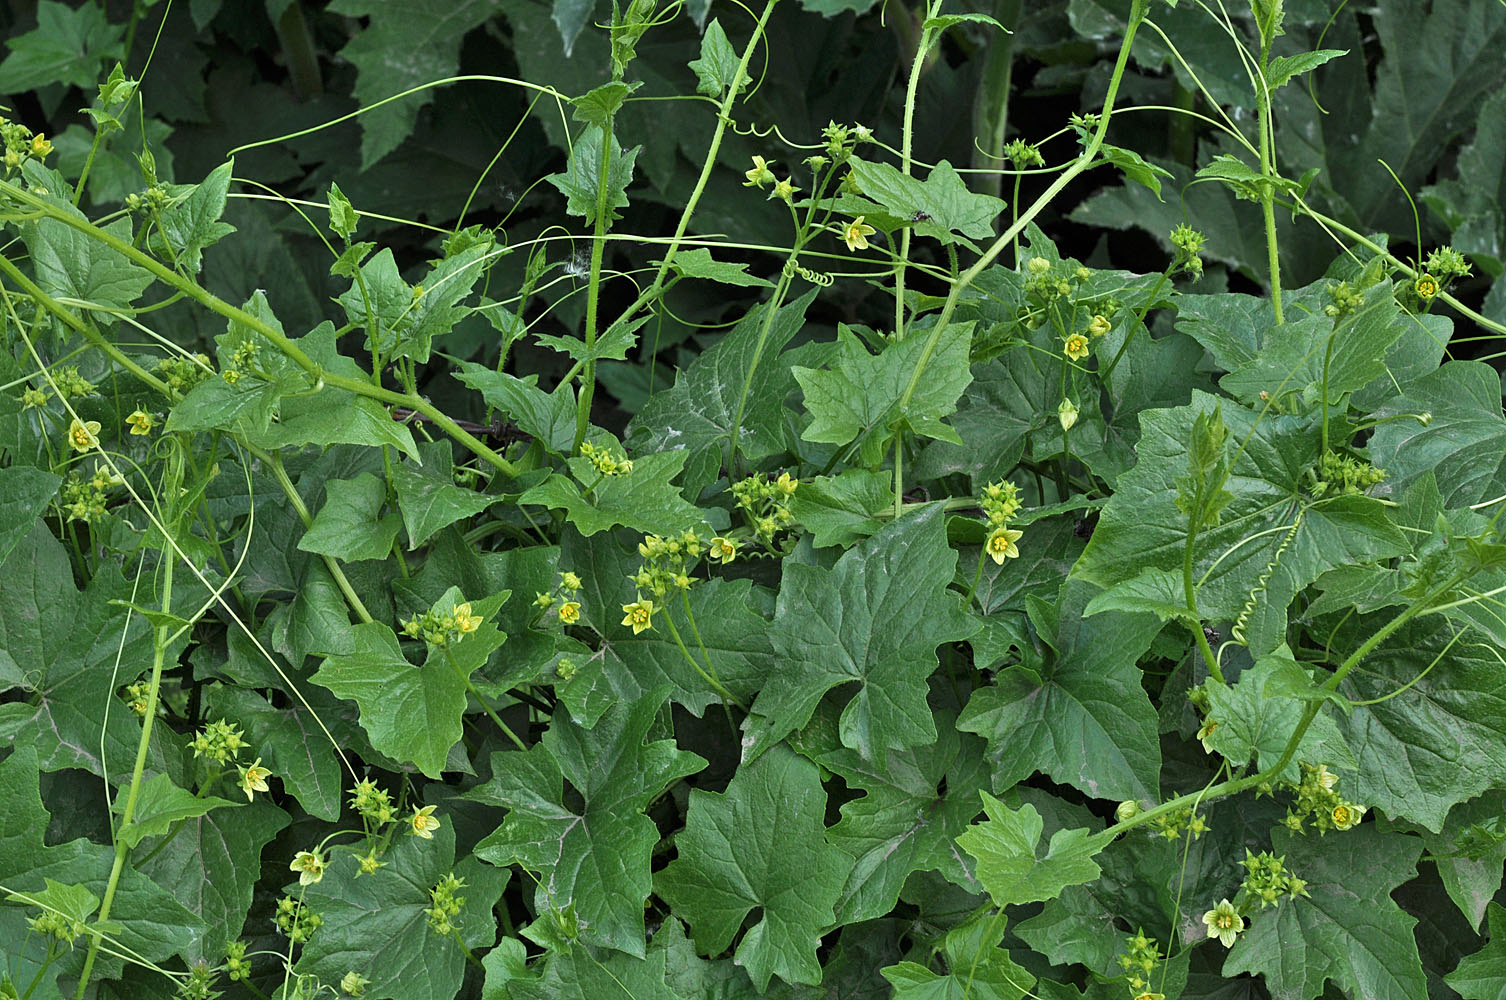 Flora of Eastern Washington Image: Bryonia alba